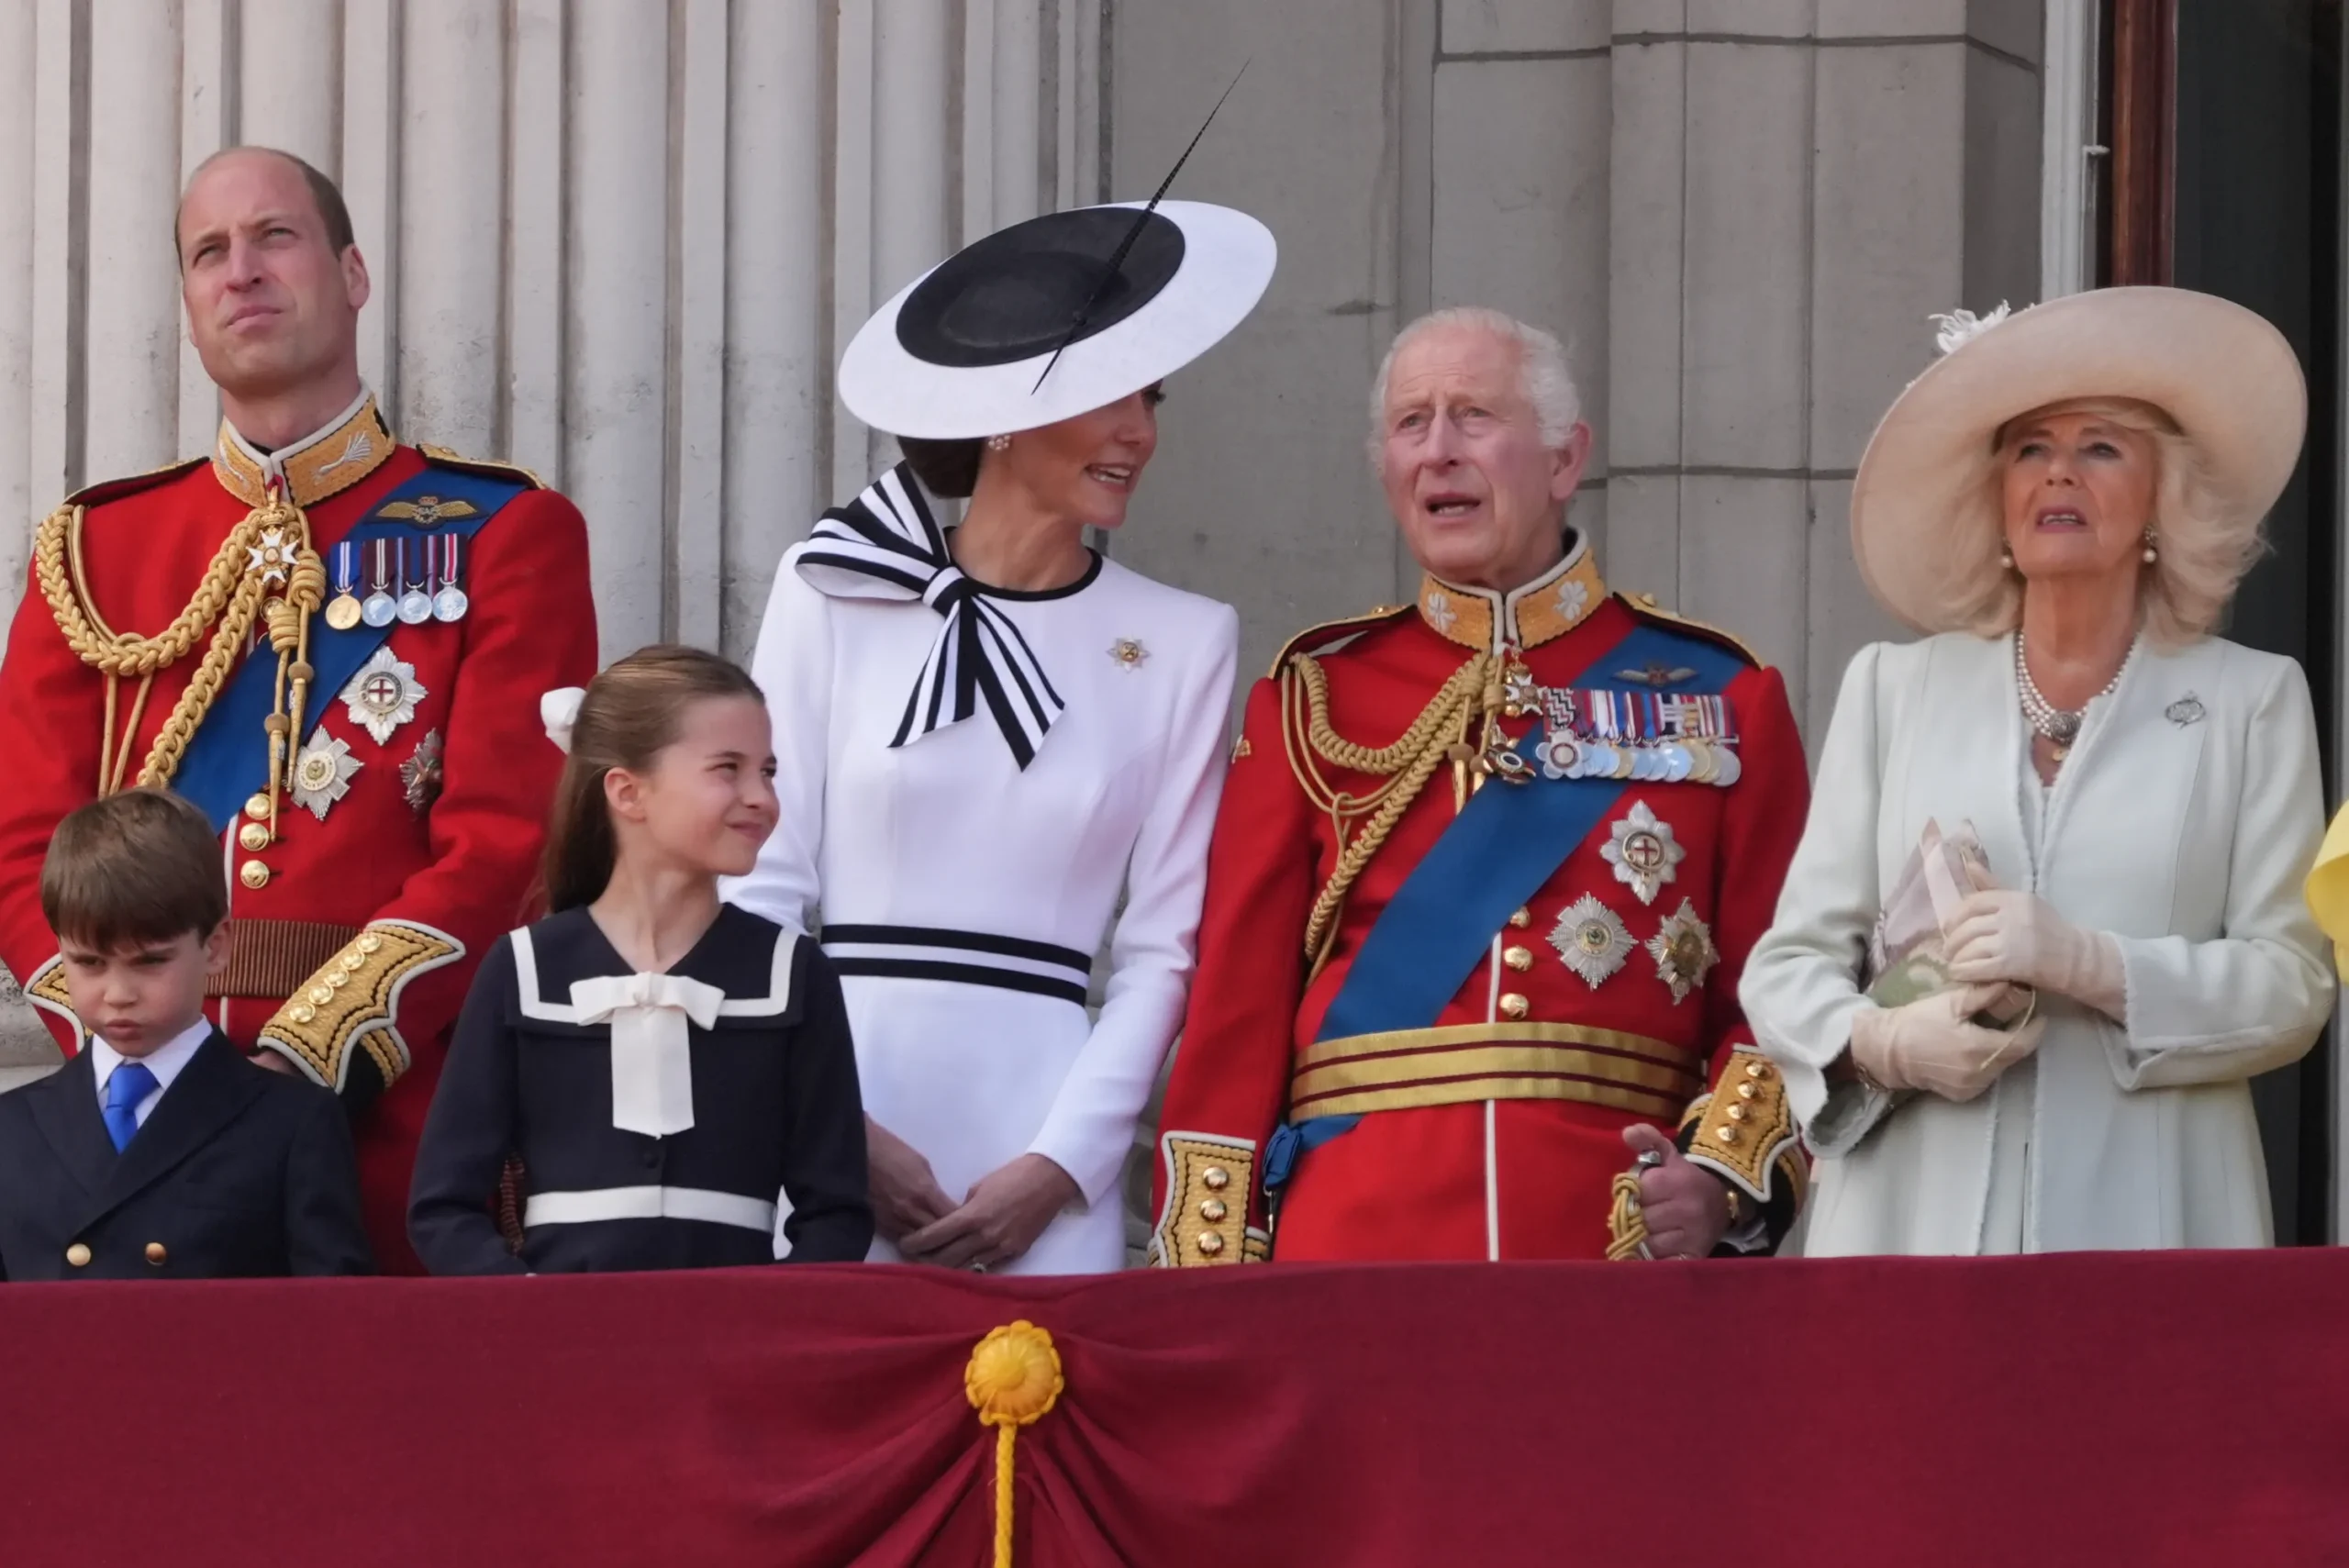 ‘Shoulder to shoulder’: King Charles and Princess Kate united at Buckingham Palace